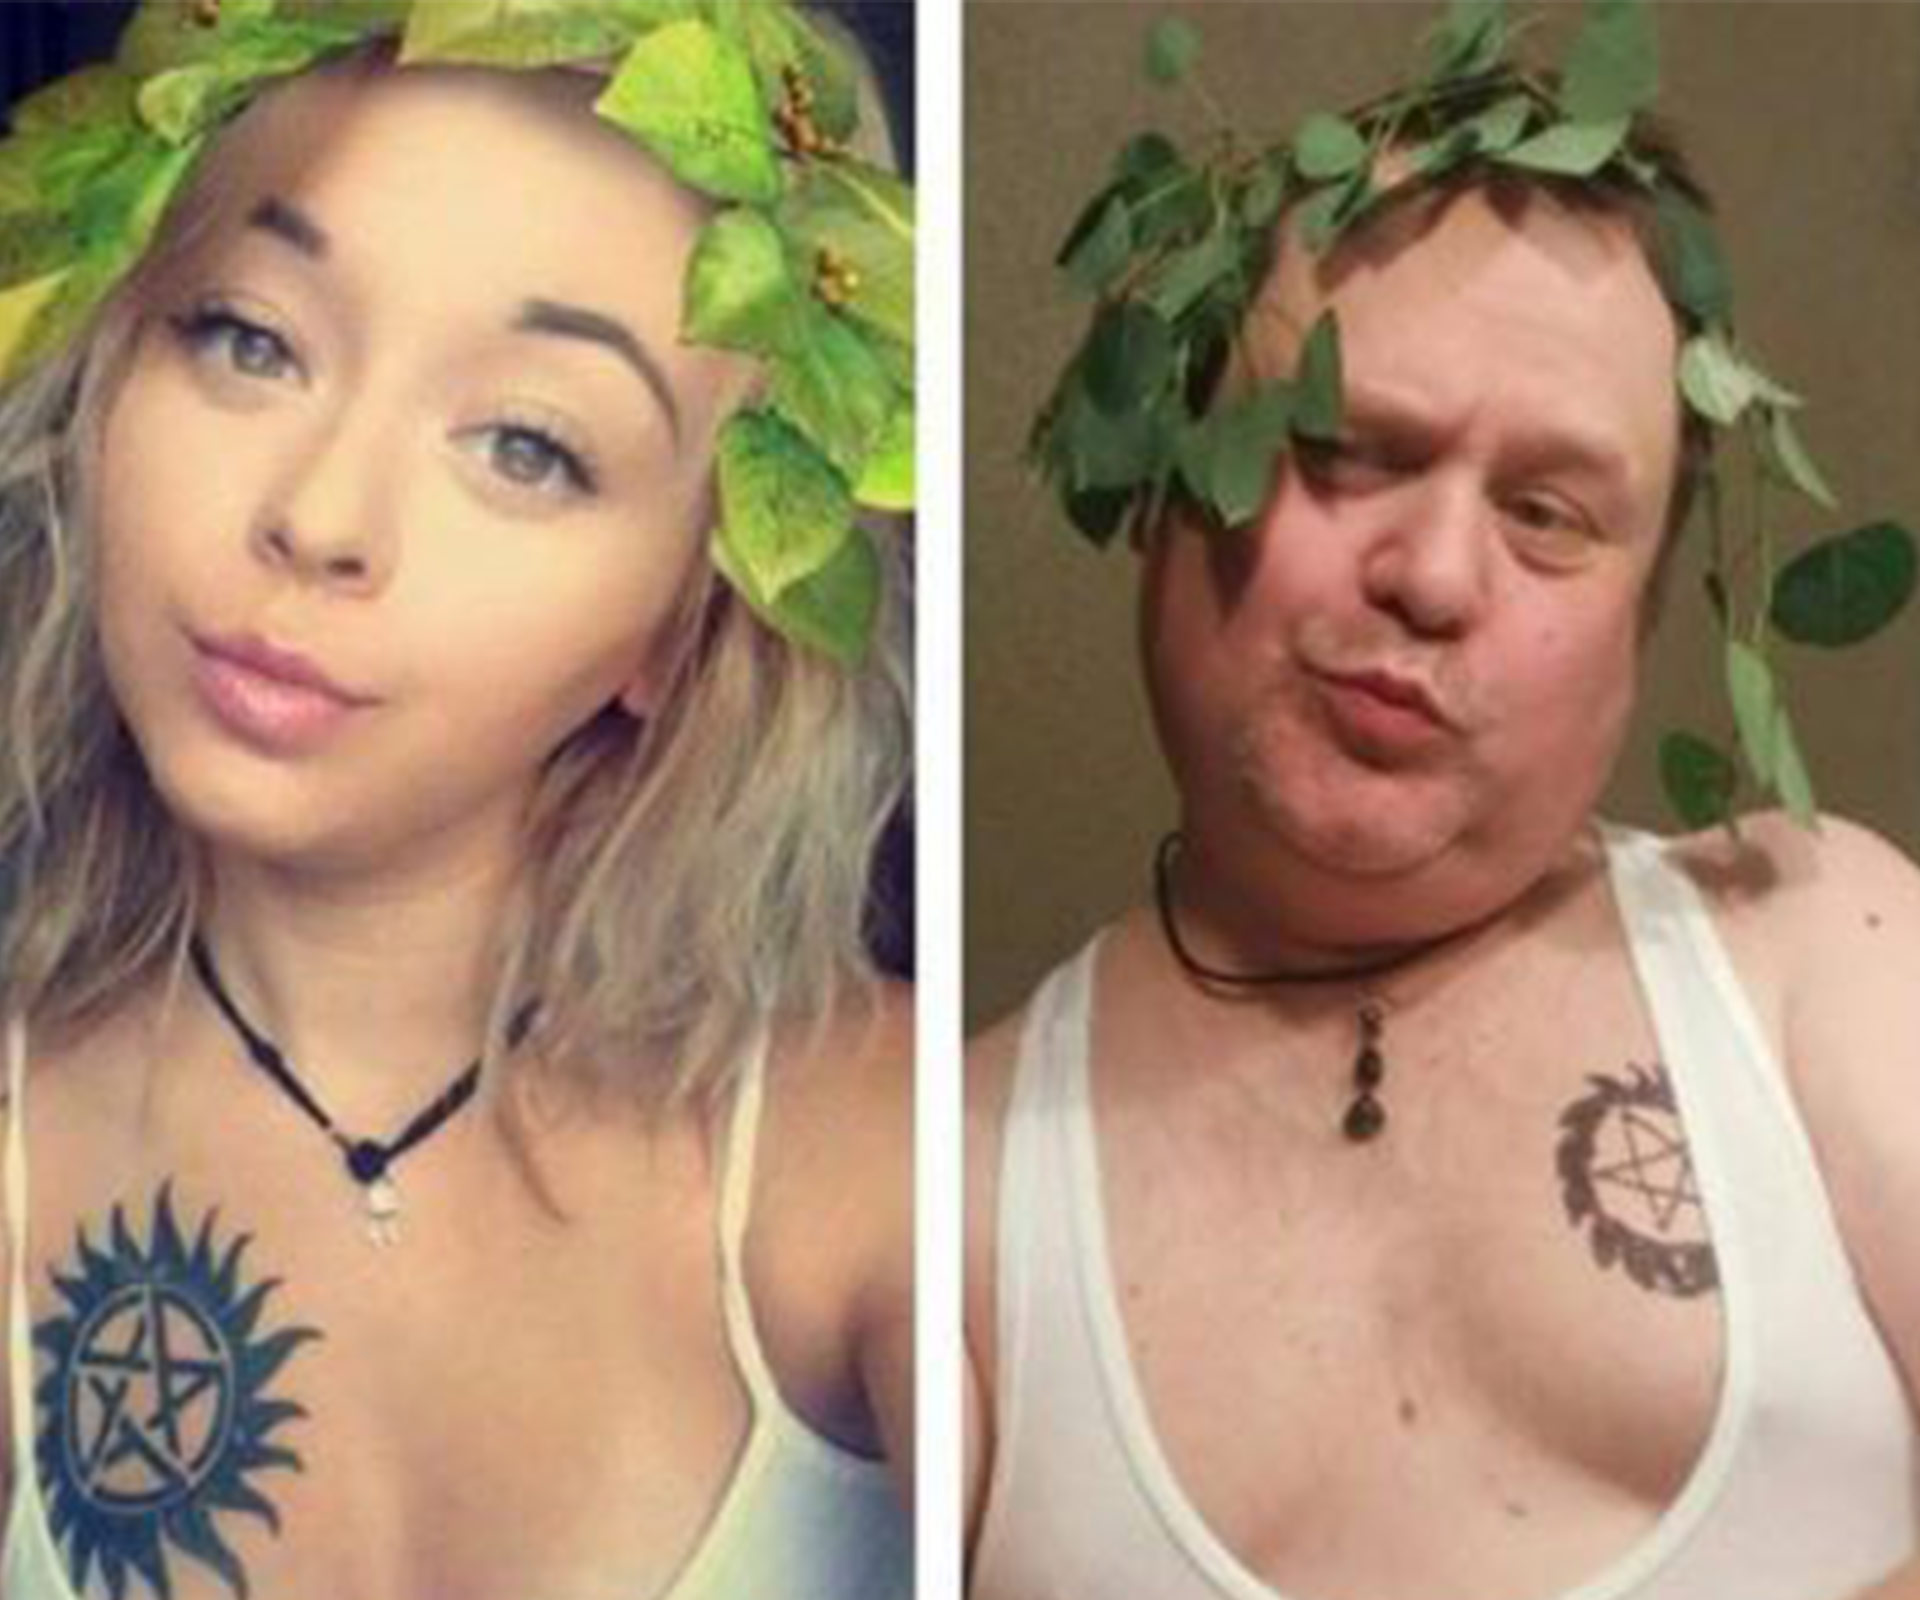 This ultimate cool dad is recreating his daughter’s selfies